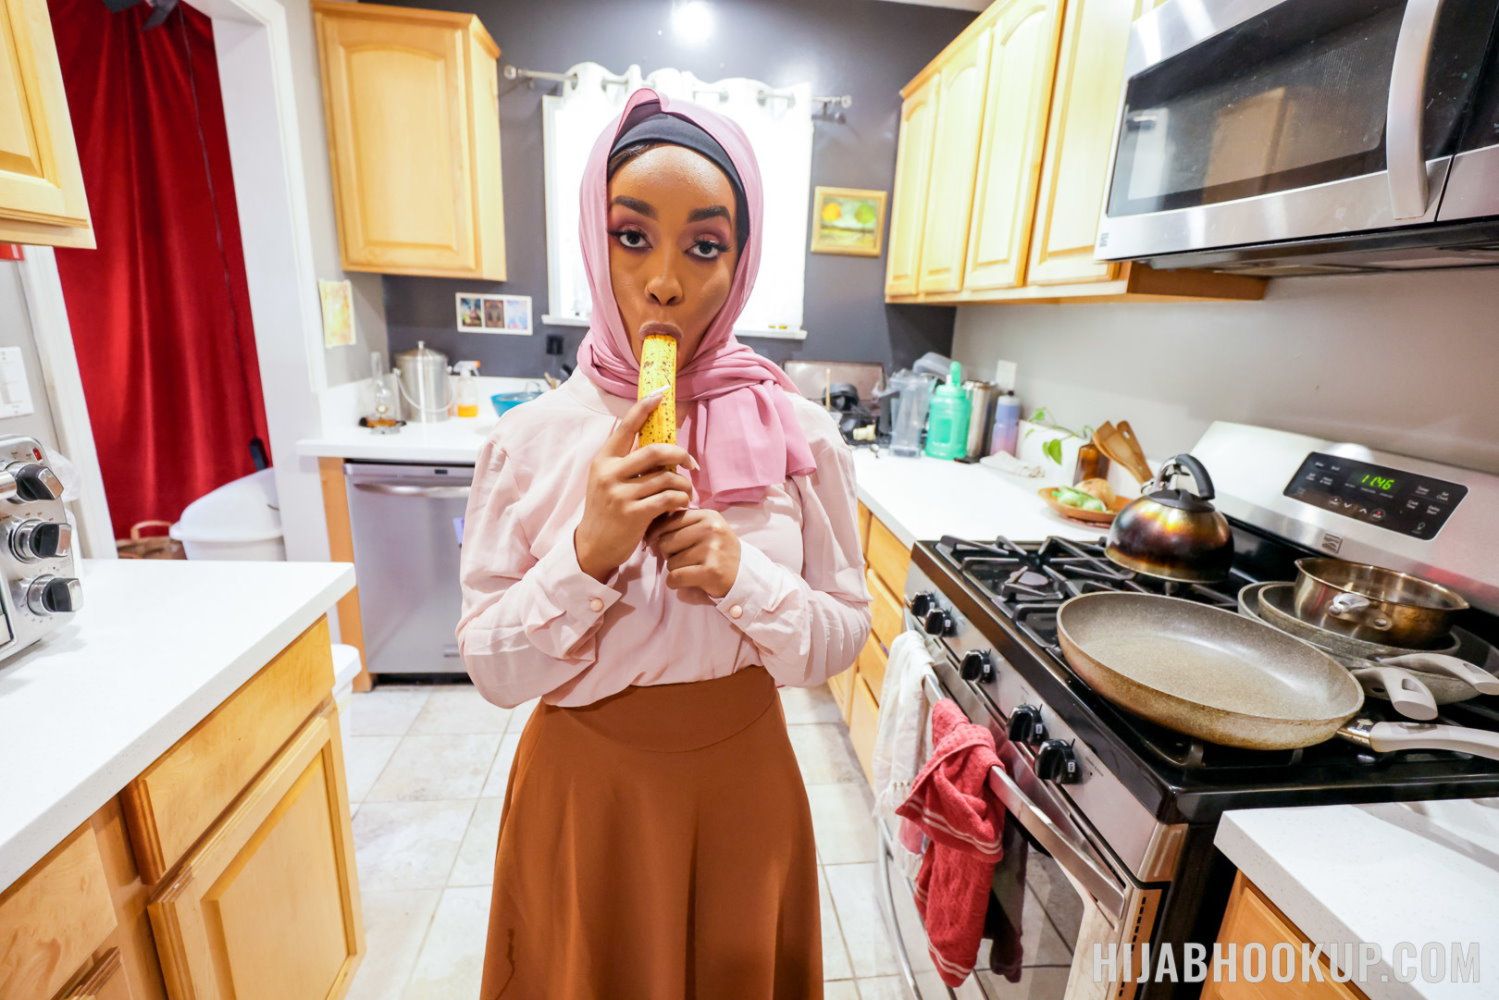 Big Tit Girl Wearing a Hijab